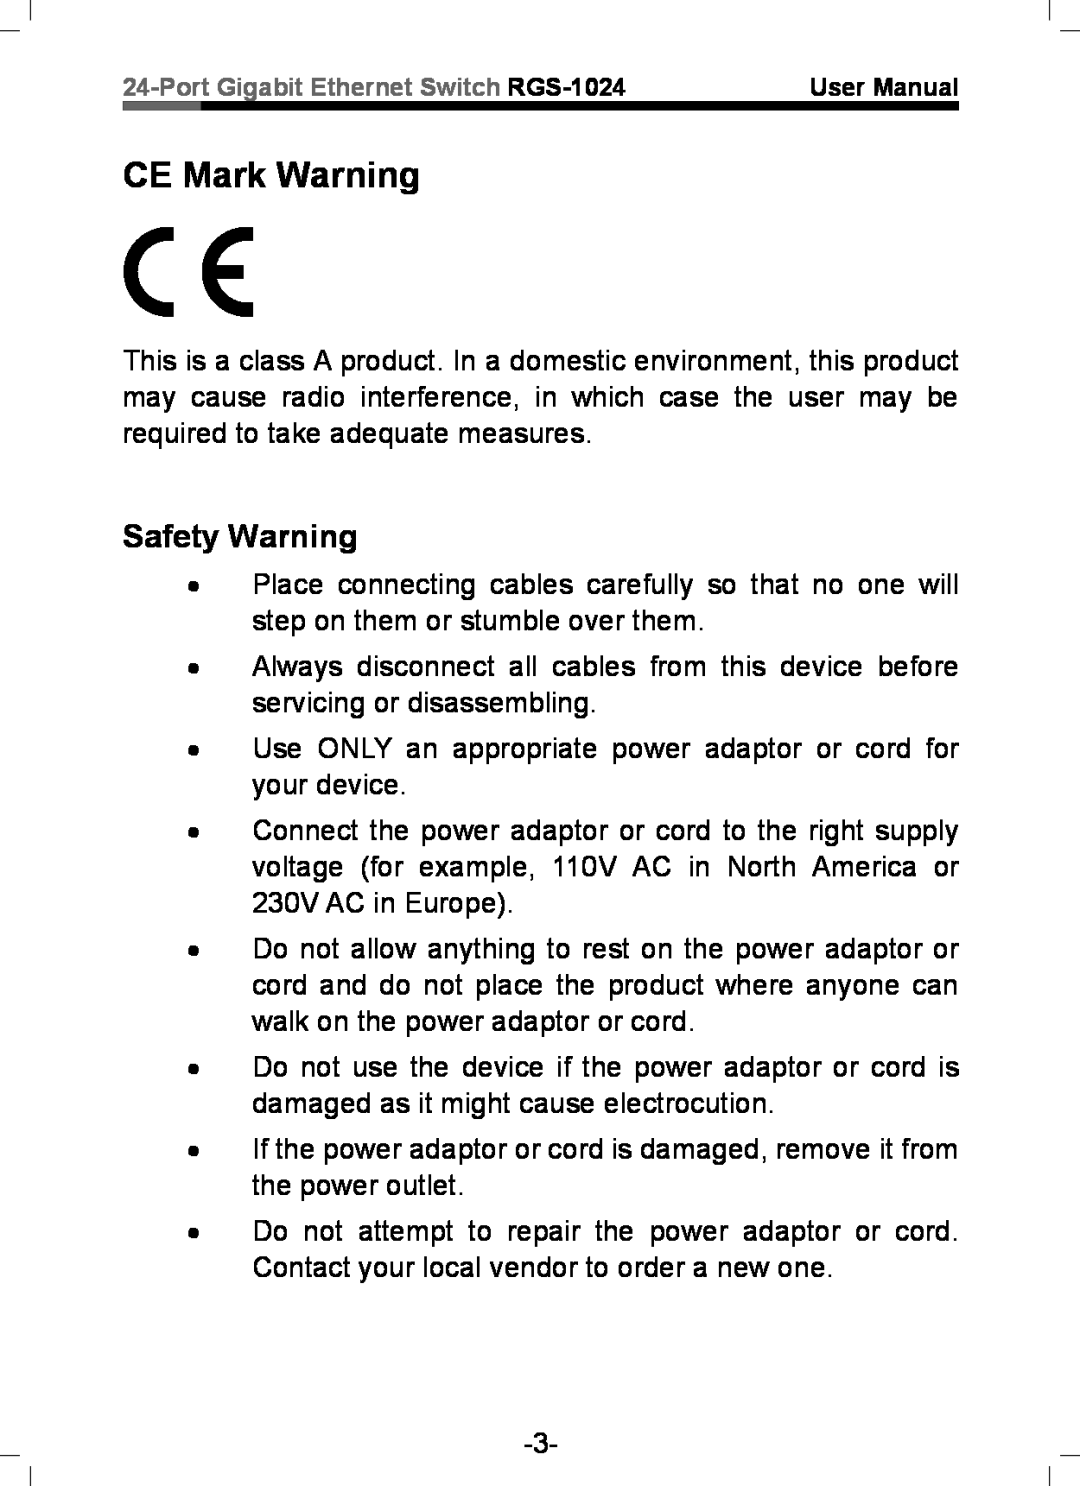 Rosewill RGS-1024 user manual CE Mark Warning, Safety Warning 